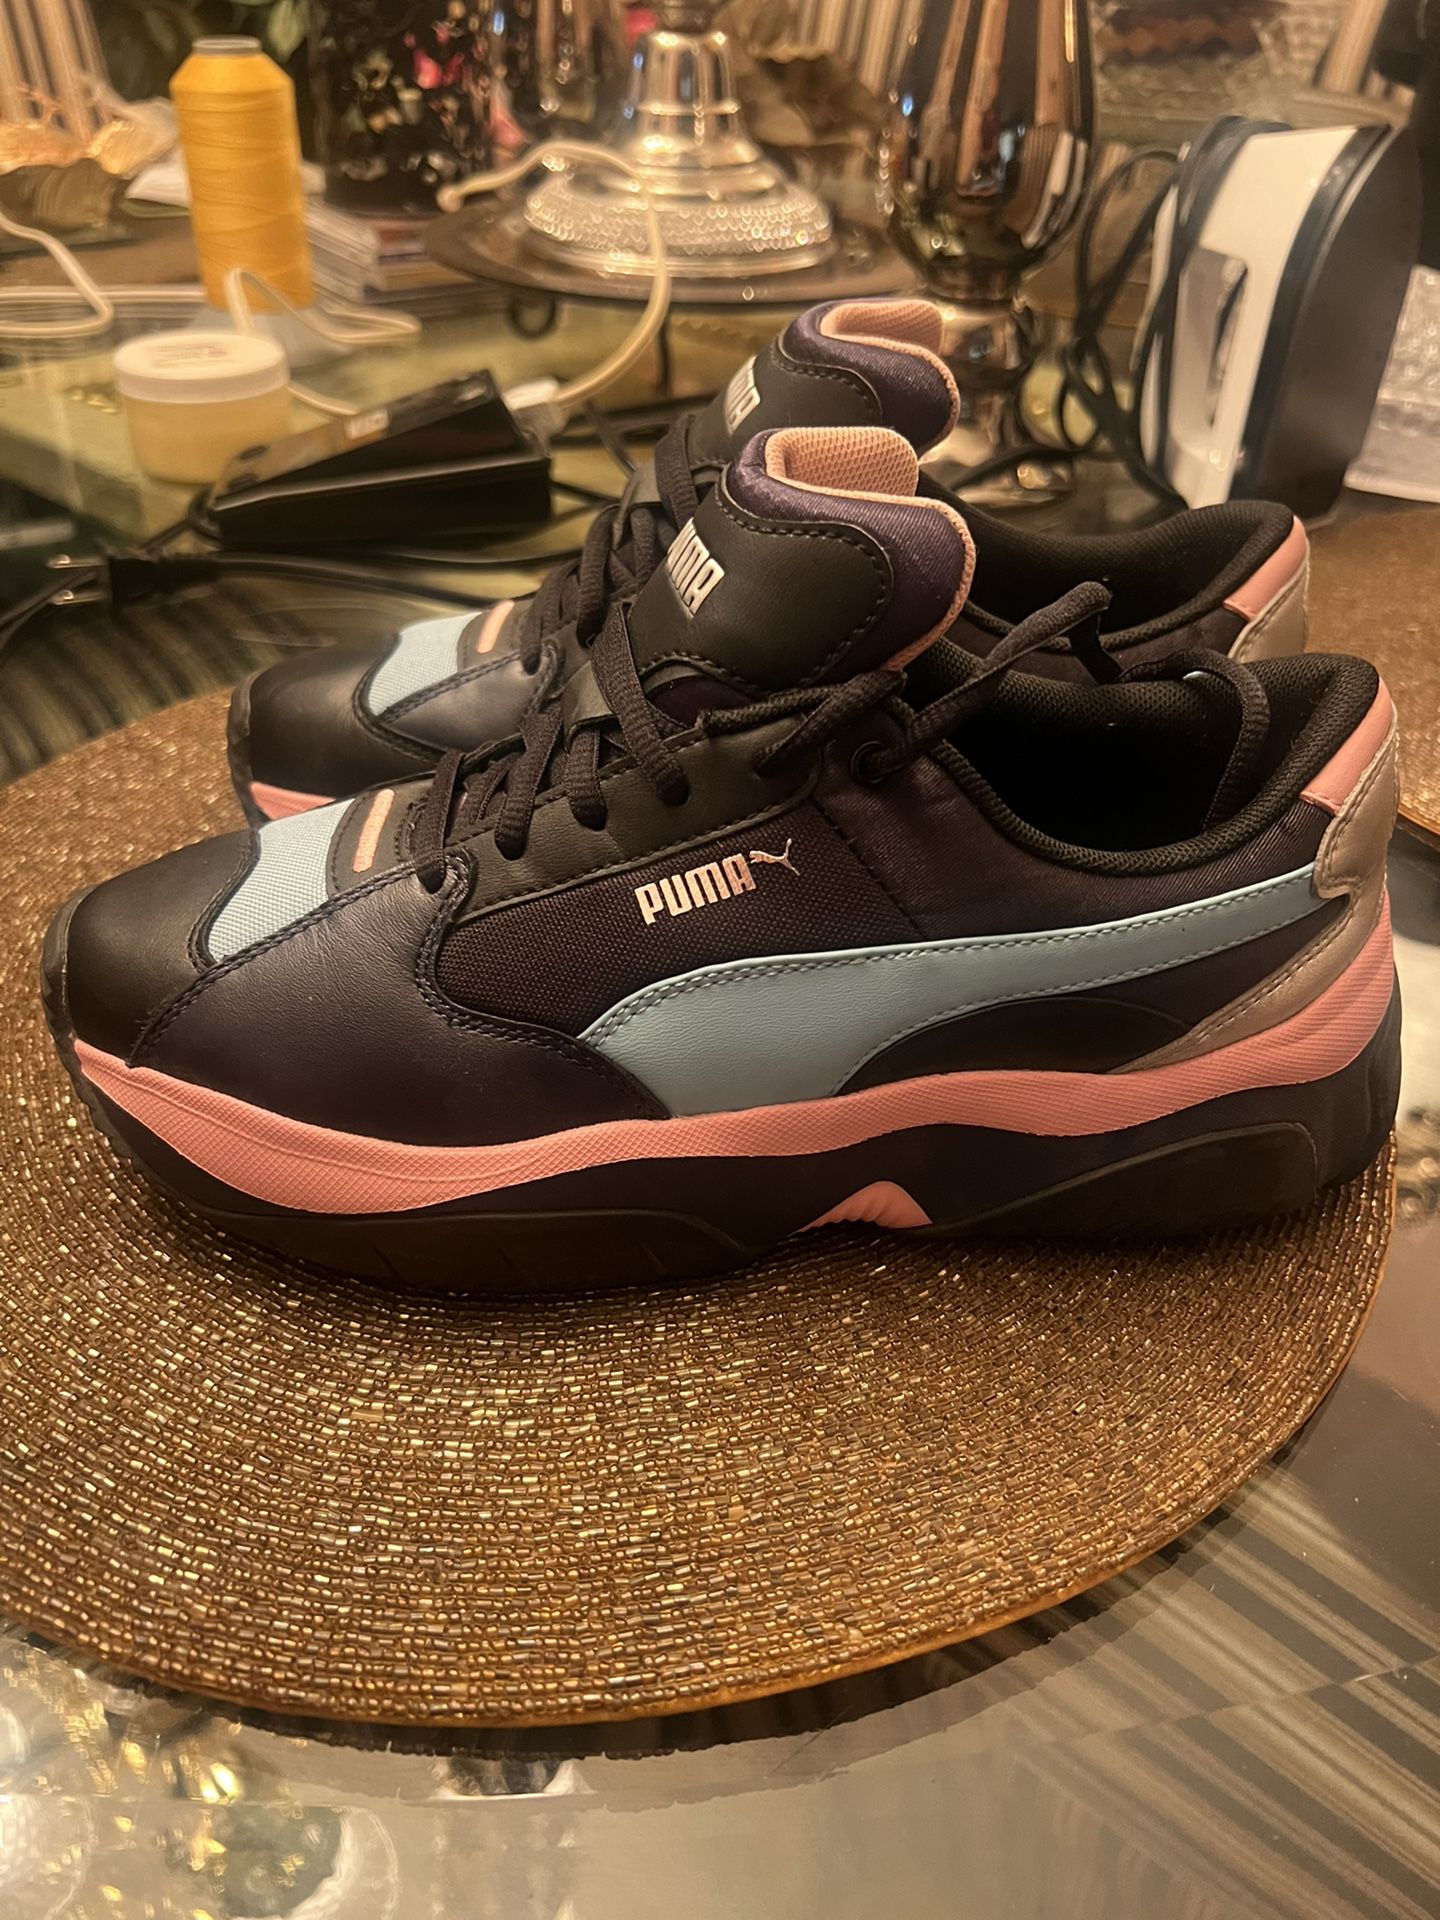 Women Shoes 👟 Pumas Size 8